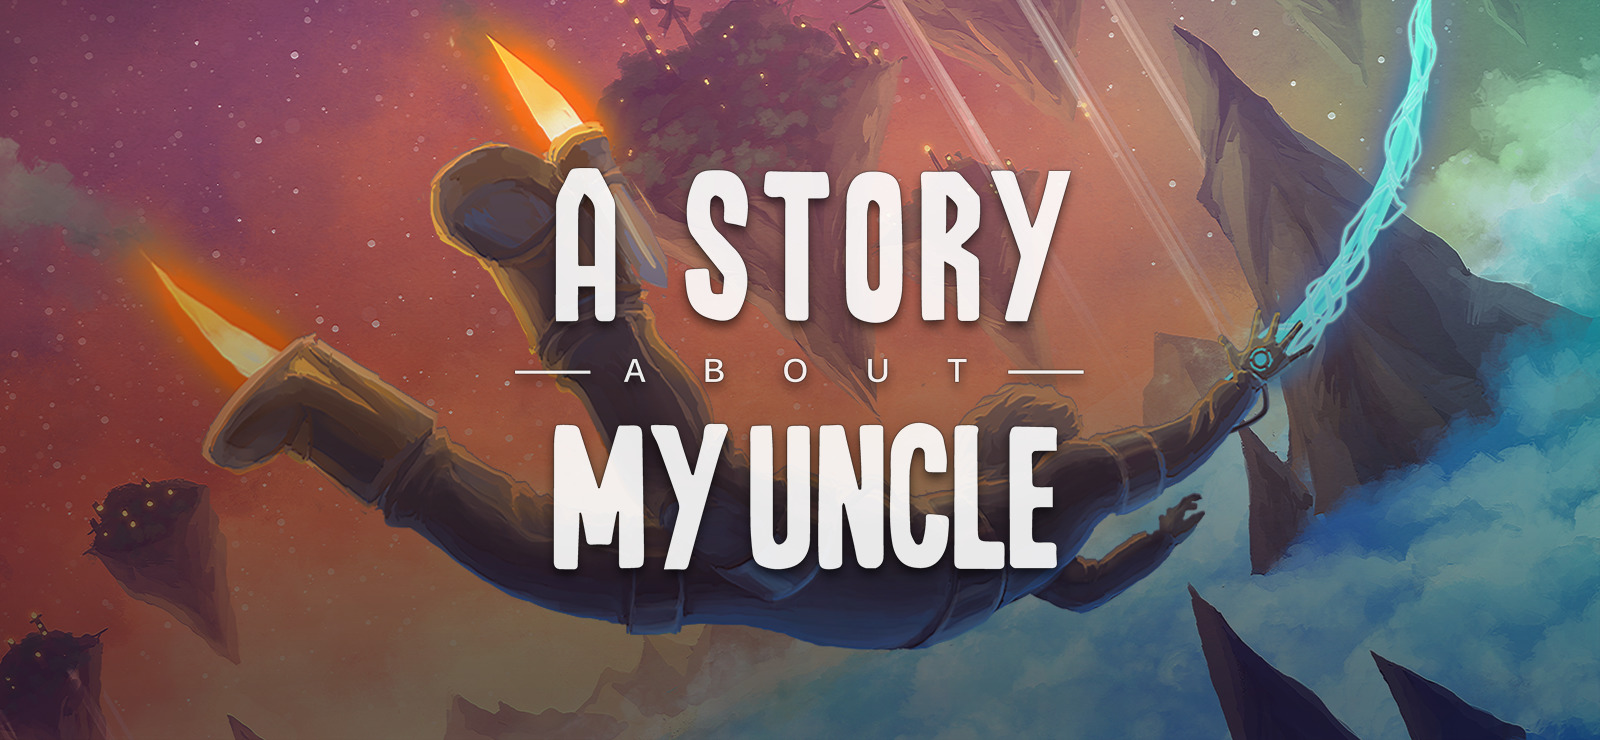 “A Story About My Uncle” Humble Bundle’da kısa süreliğine ücretsiz